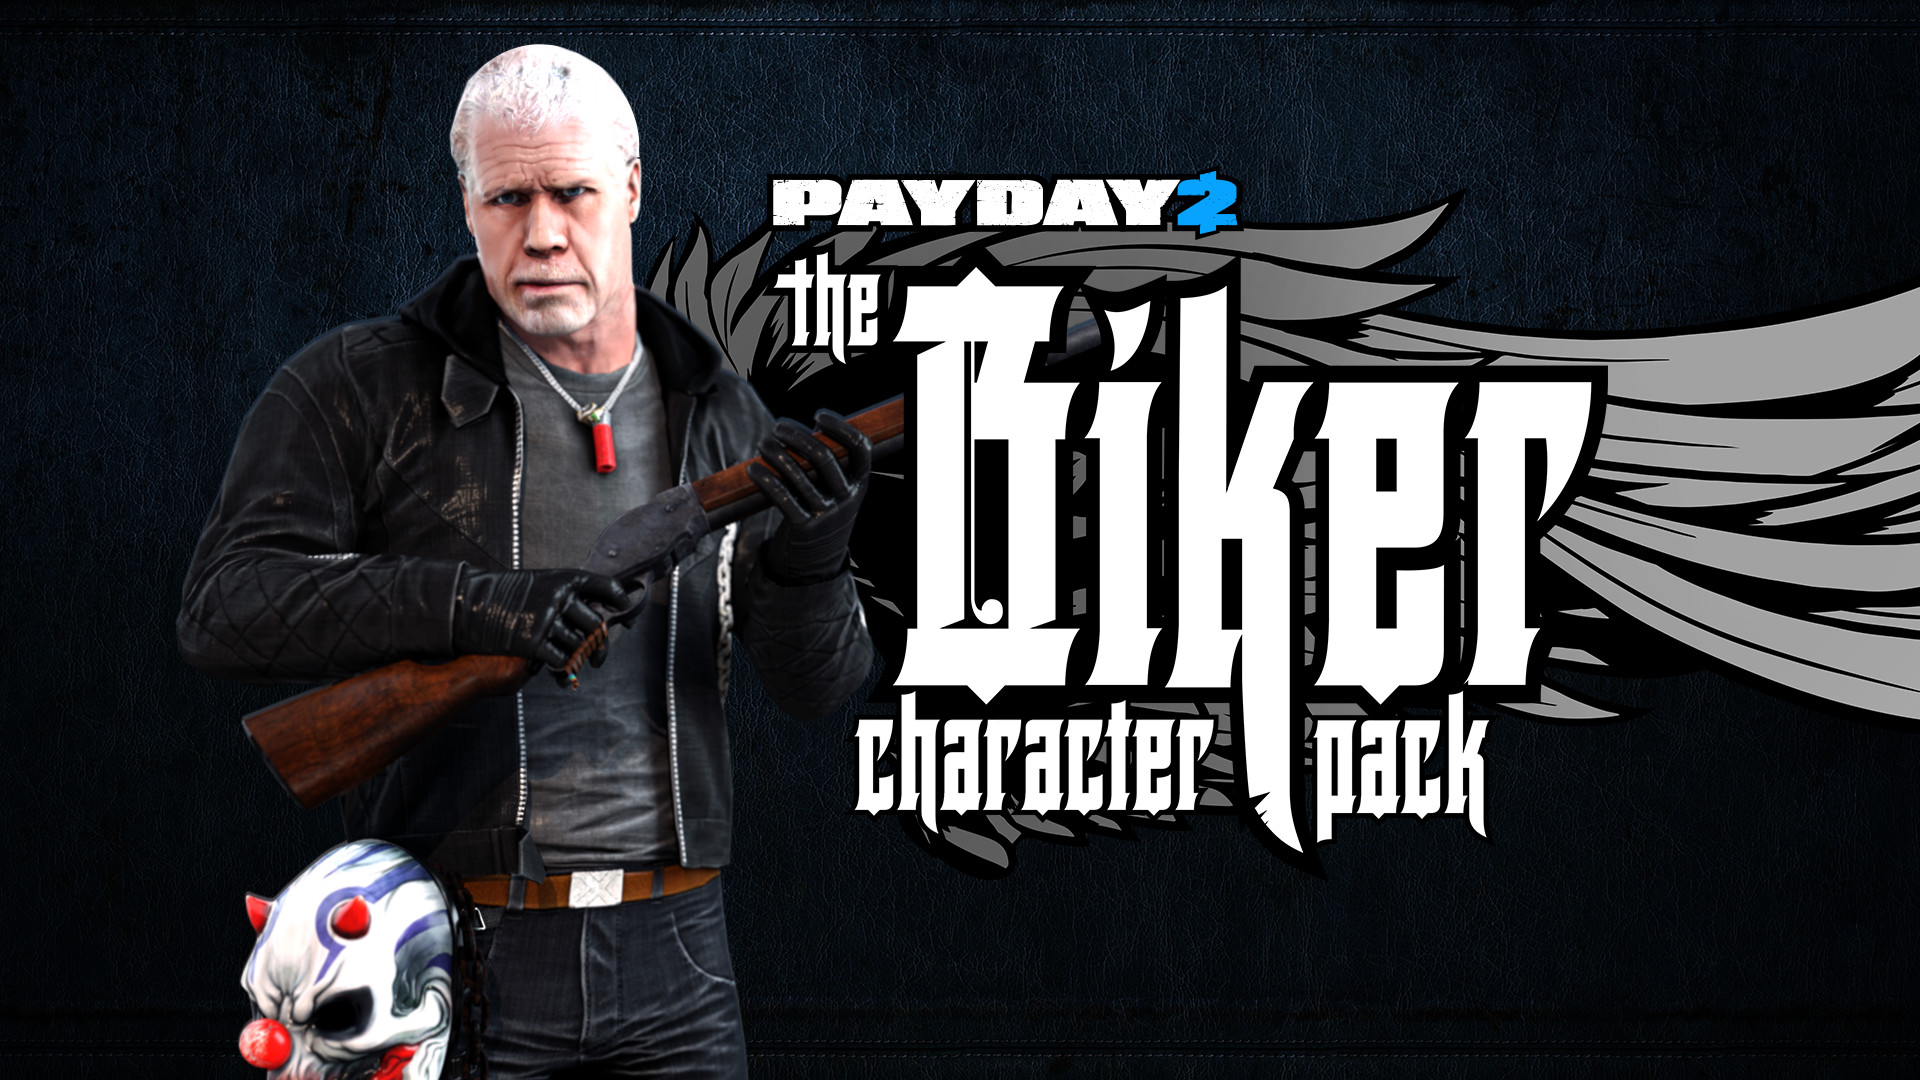 PAYDAY 2: Biker Character Pack Featured Screenshot #1